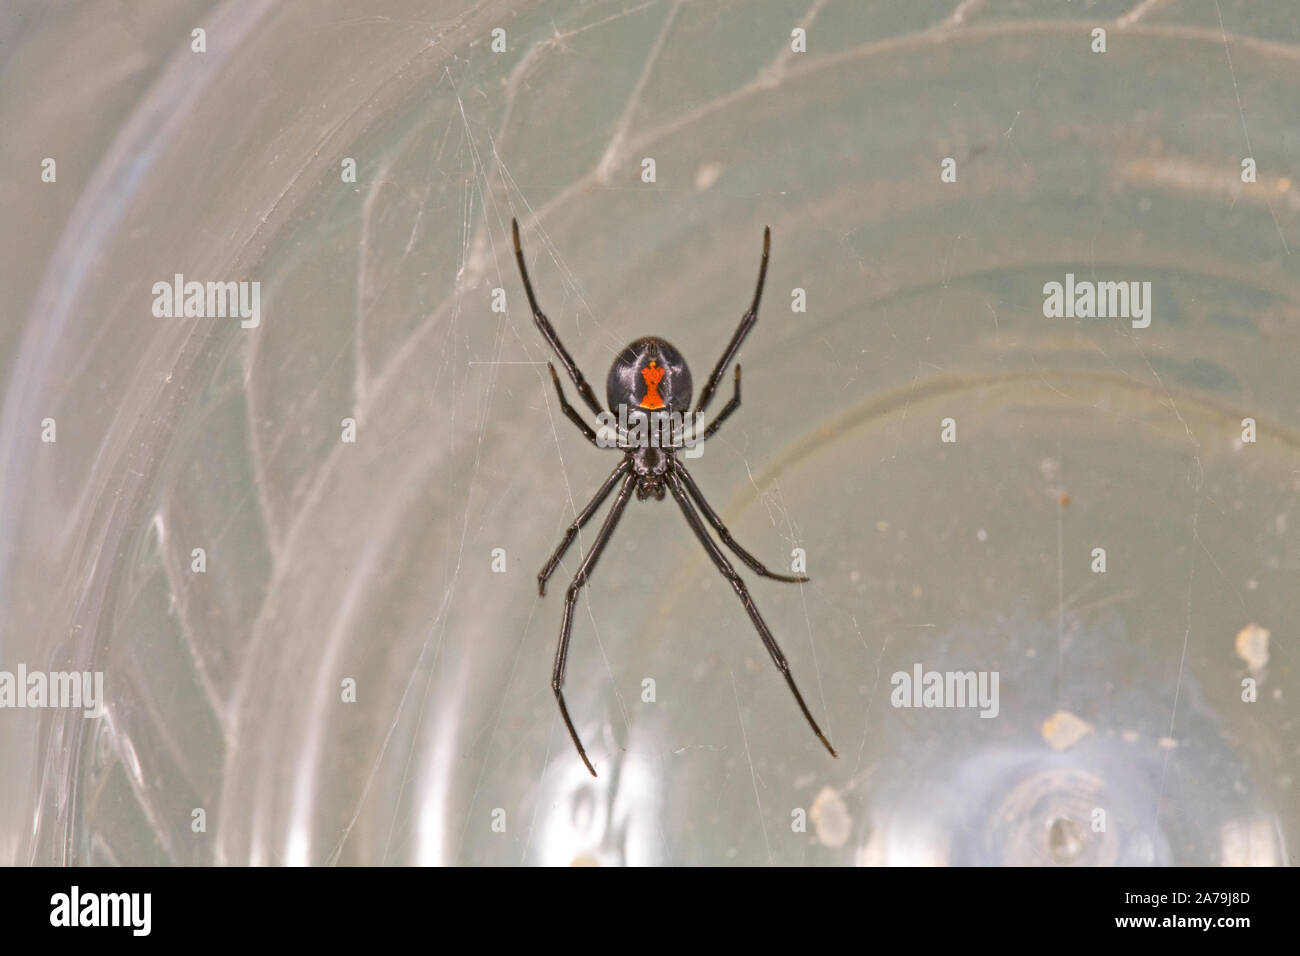 Close-up of a western black widow spider, Latrodectus hersperus. Stock Photo